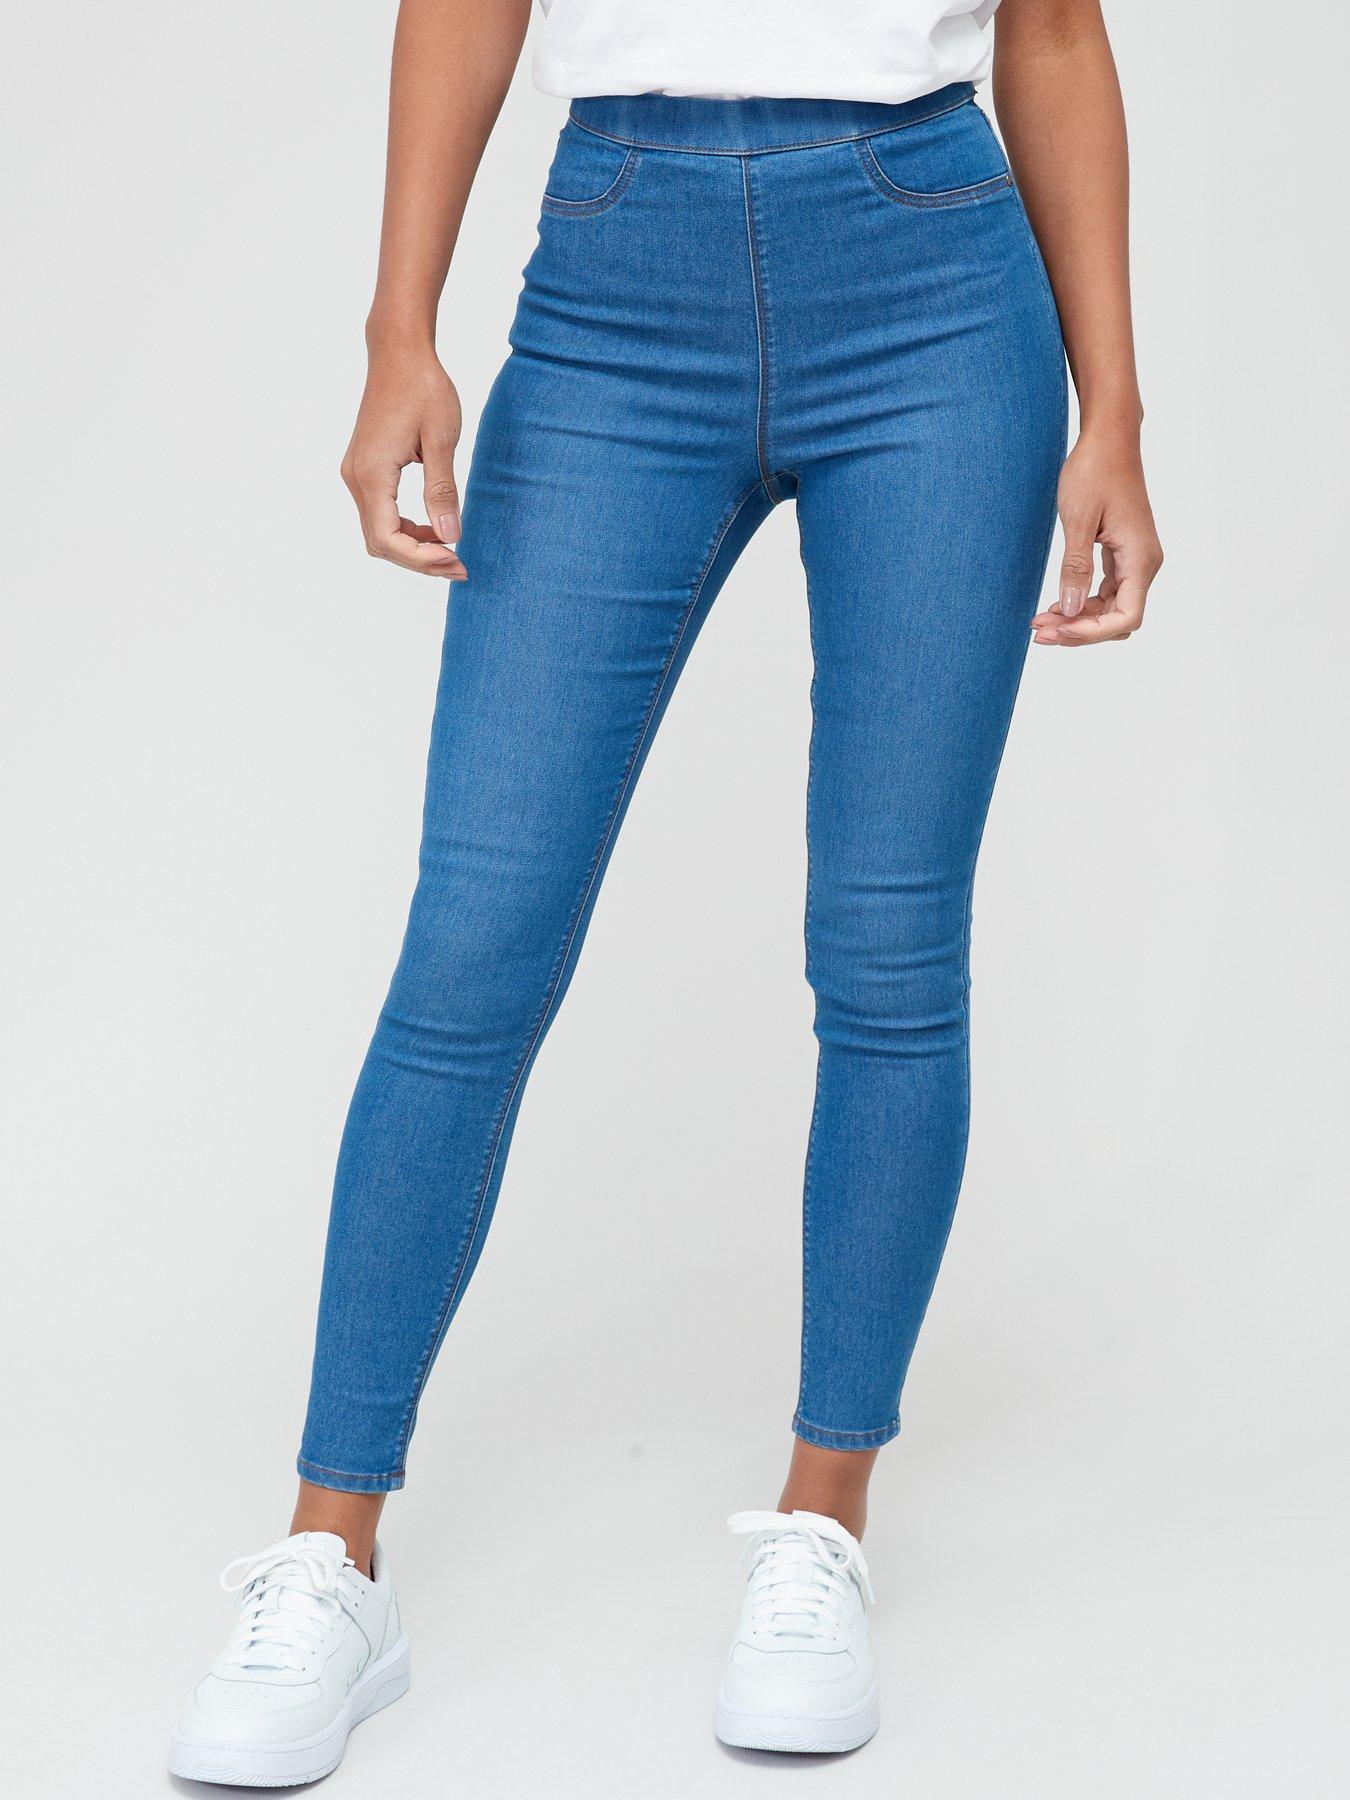 H&M Jeggings, Women's Fashion, Bottoms, Jeans & Leggings on Carousell